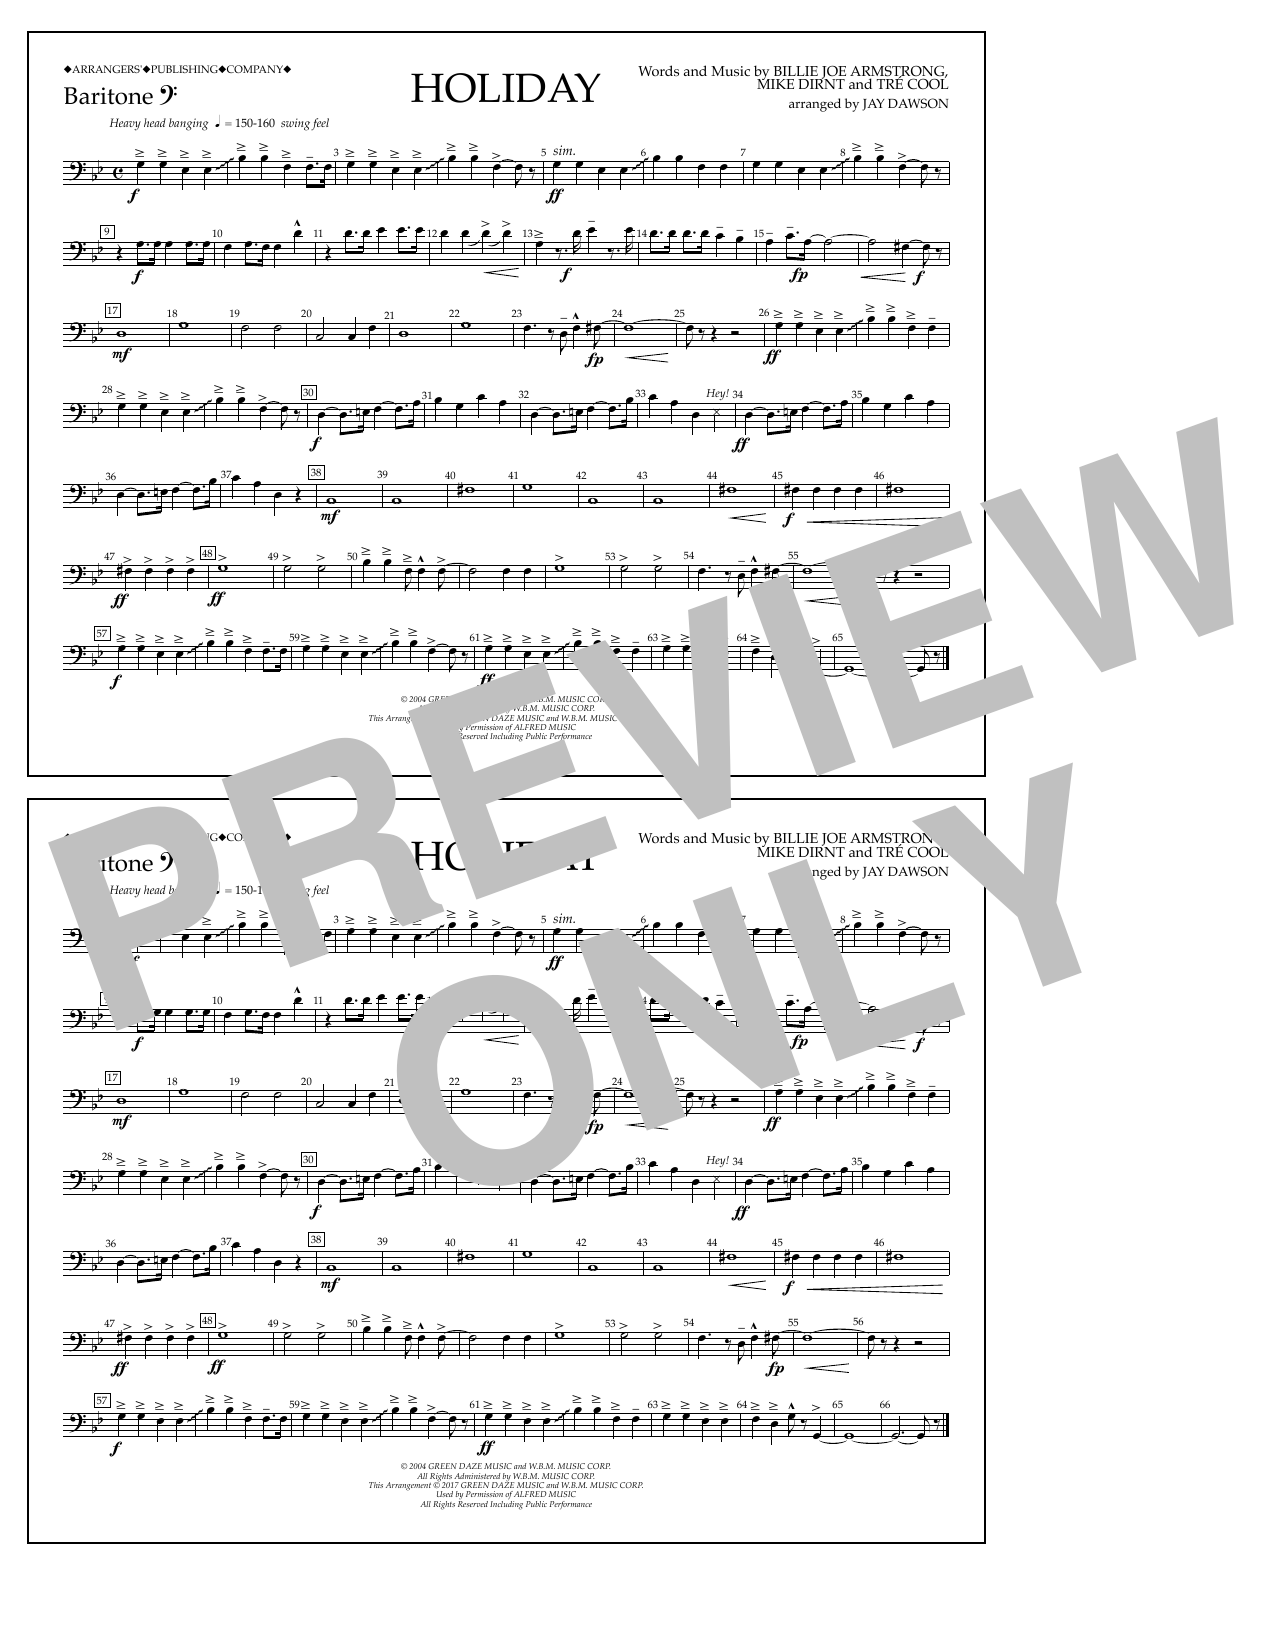 Jay Dawson Holiday - Baritone B.C. Sheet Music Notes & Chords for Marching Band - Download or Print PDF